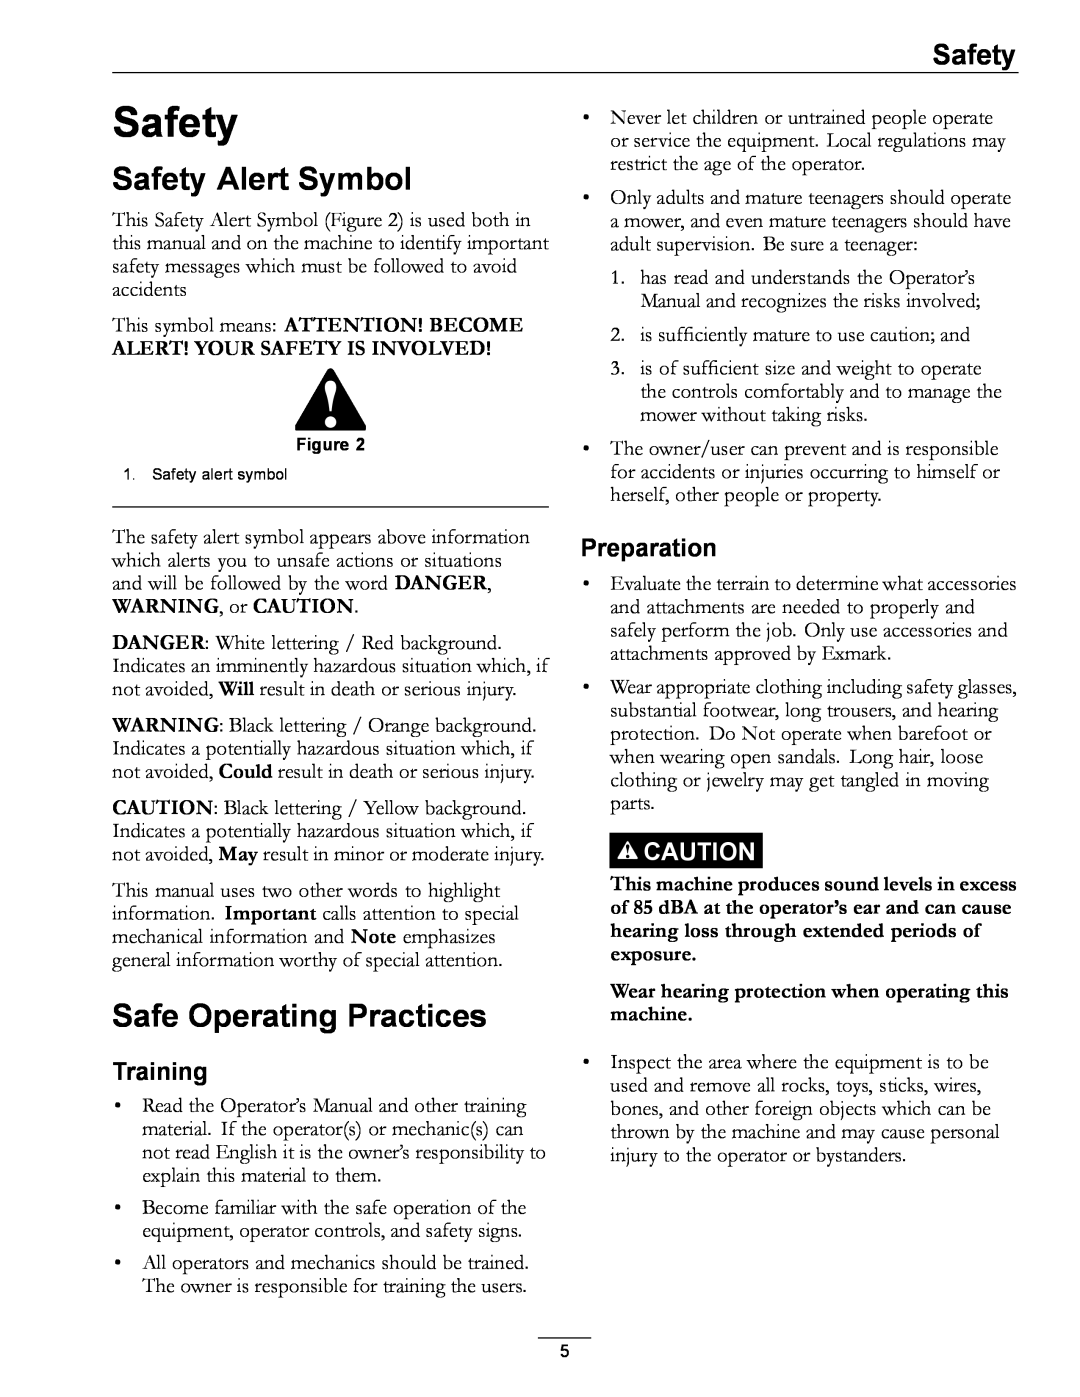 Exmark 4500-528 Safety Alert Symbol, Safe Operating Practices, Training, Preparation, Alert! Your Safety Is Involved 